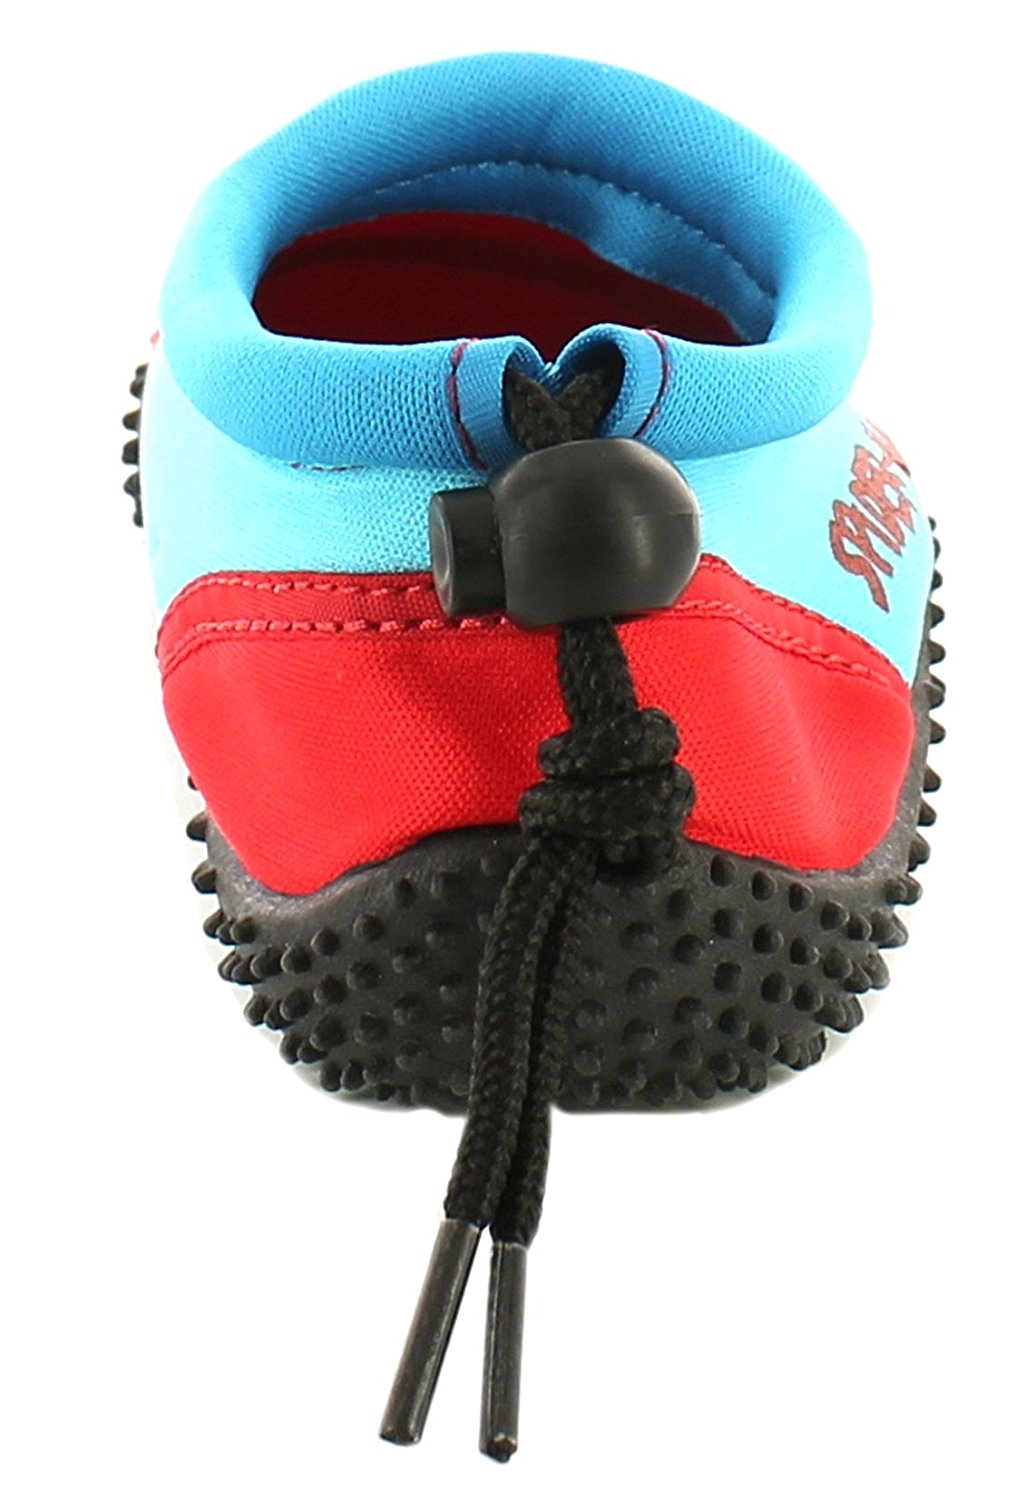 Spiderman Size 7 Wet Aqua Shoes